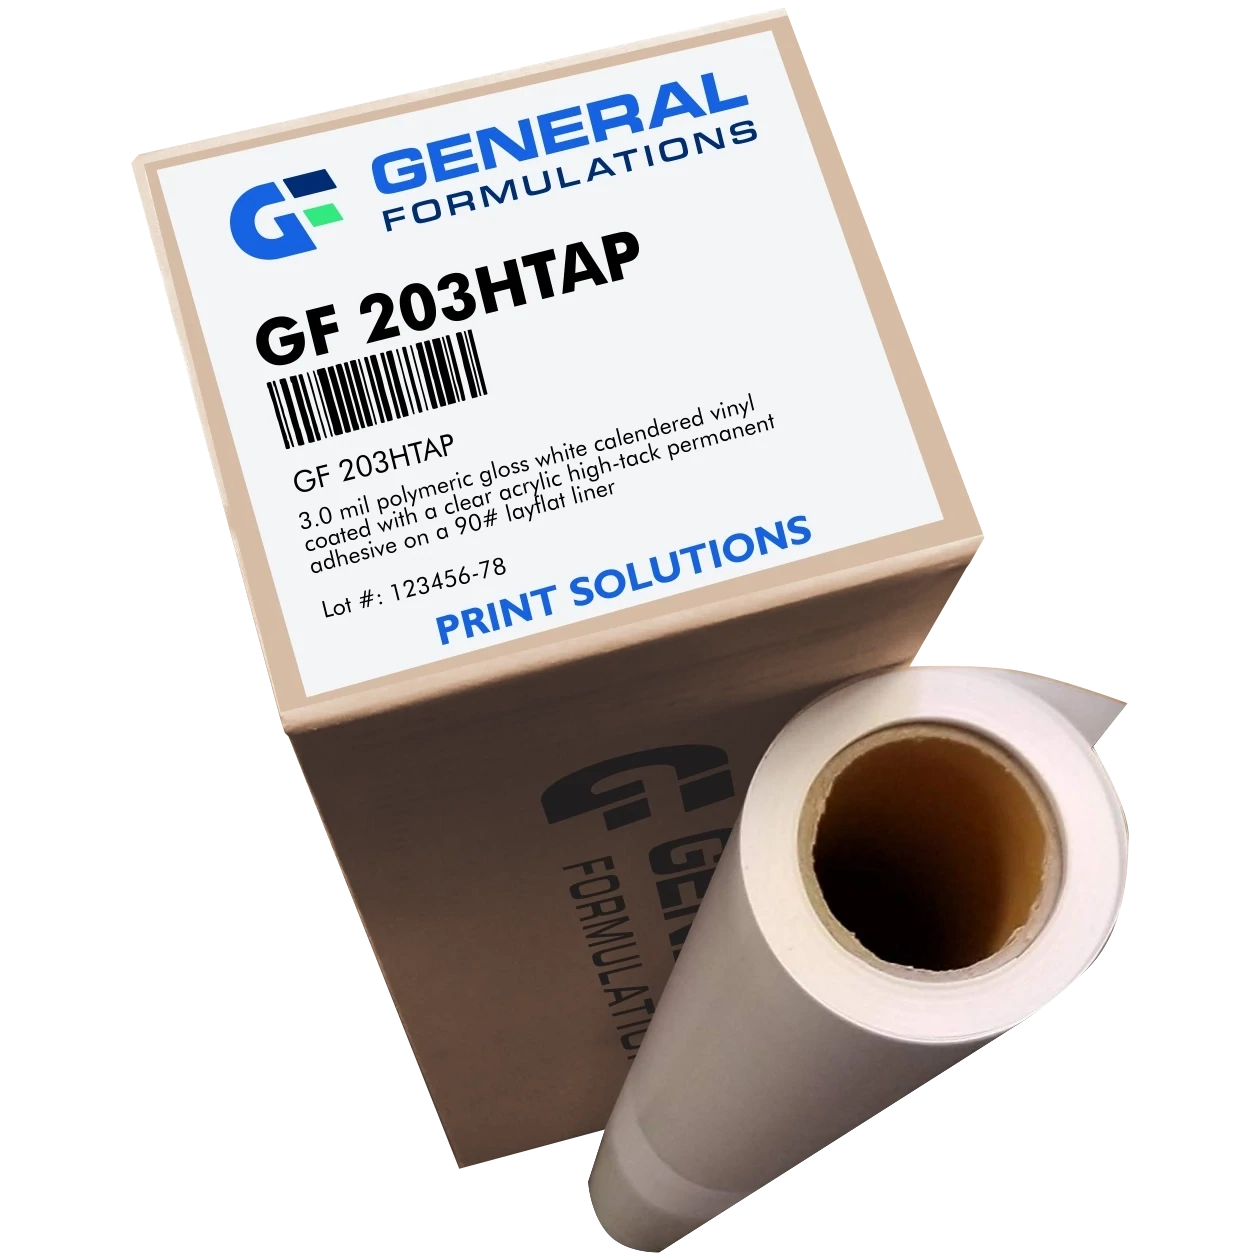 General Formulations 203HTAP Gloss White Vinyl - High-Tack Permanent